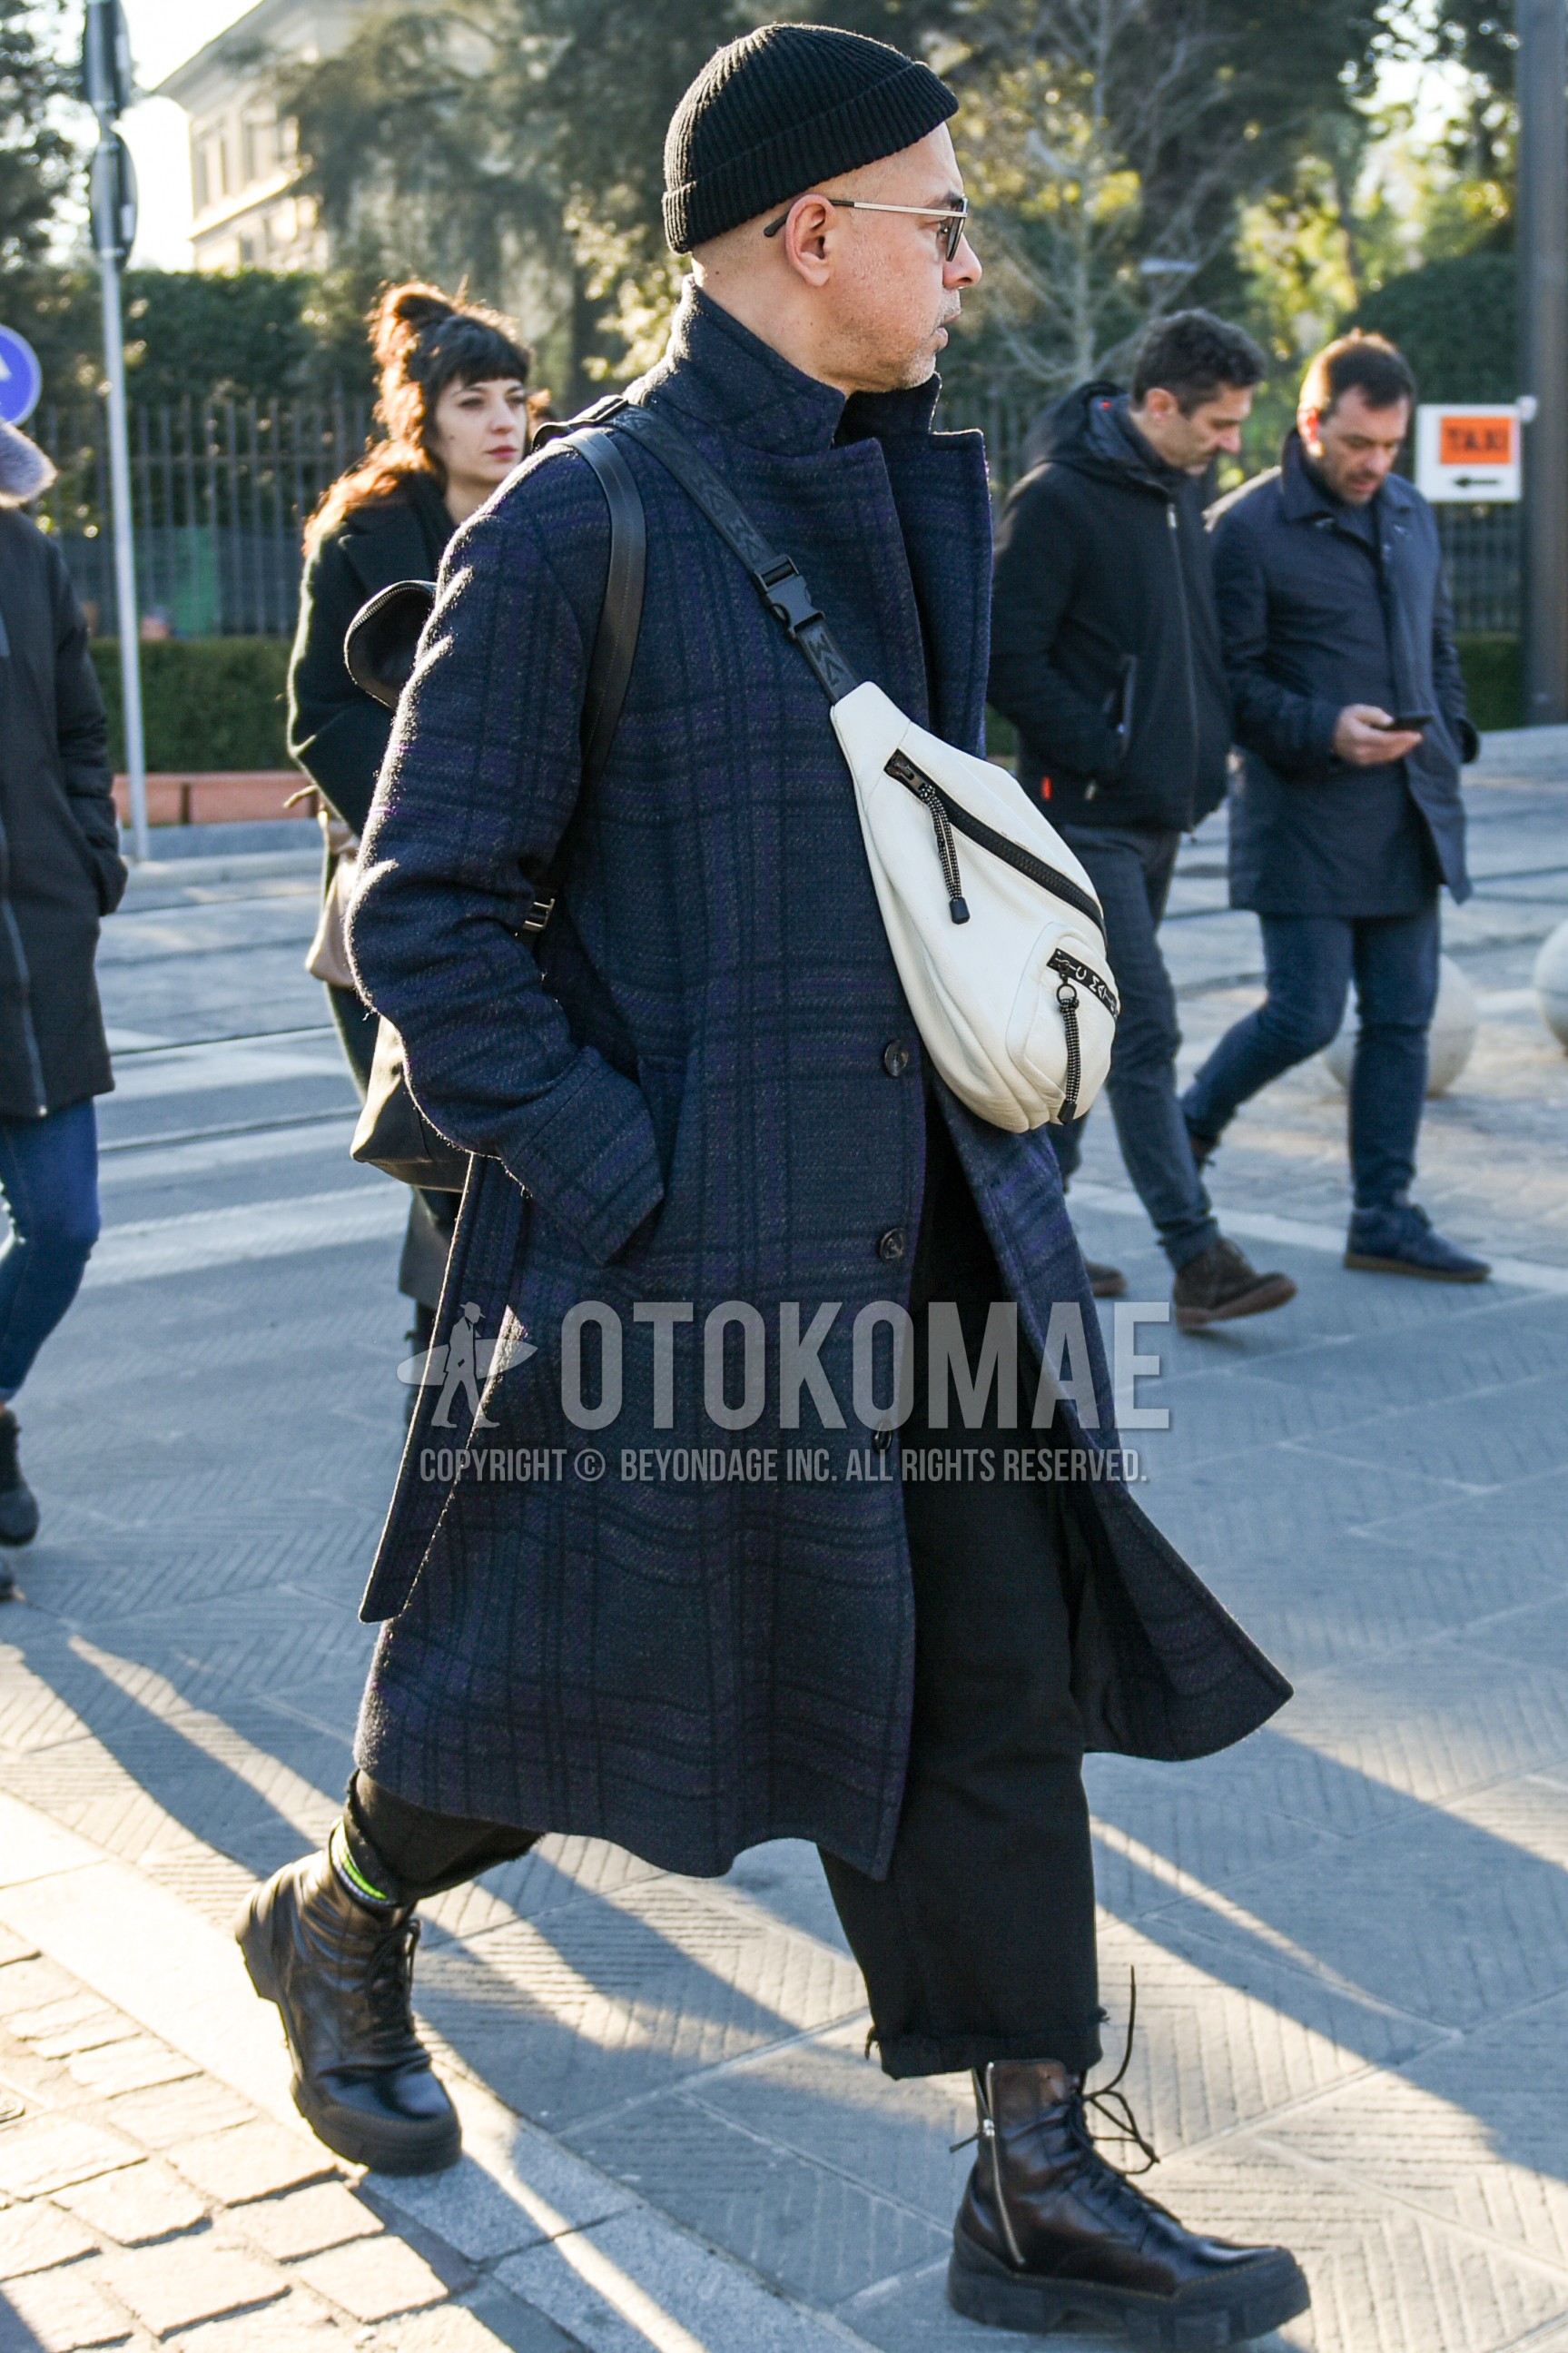 Men's autumn winter outfit with black plain knit cap, black plain glasses, gray check chester coat, dark gray plain slacks, brown  boots, white plain shoulder bag.